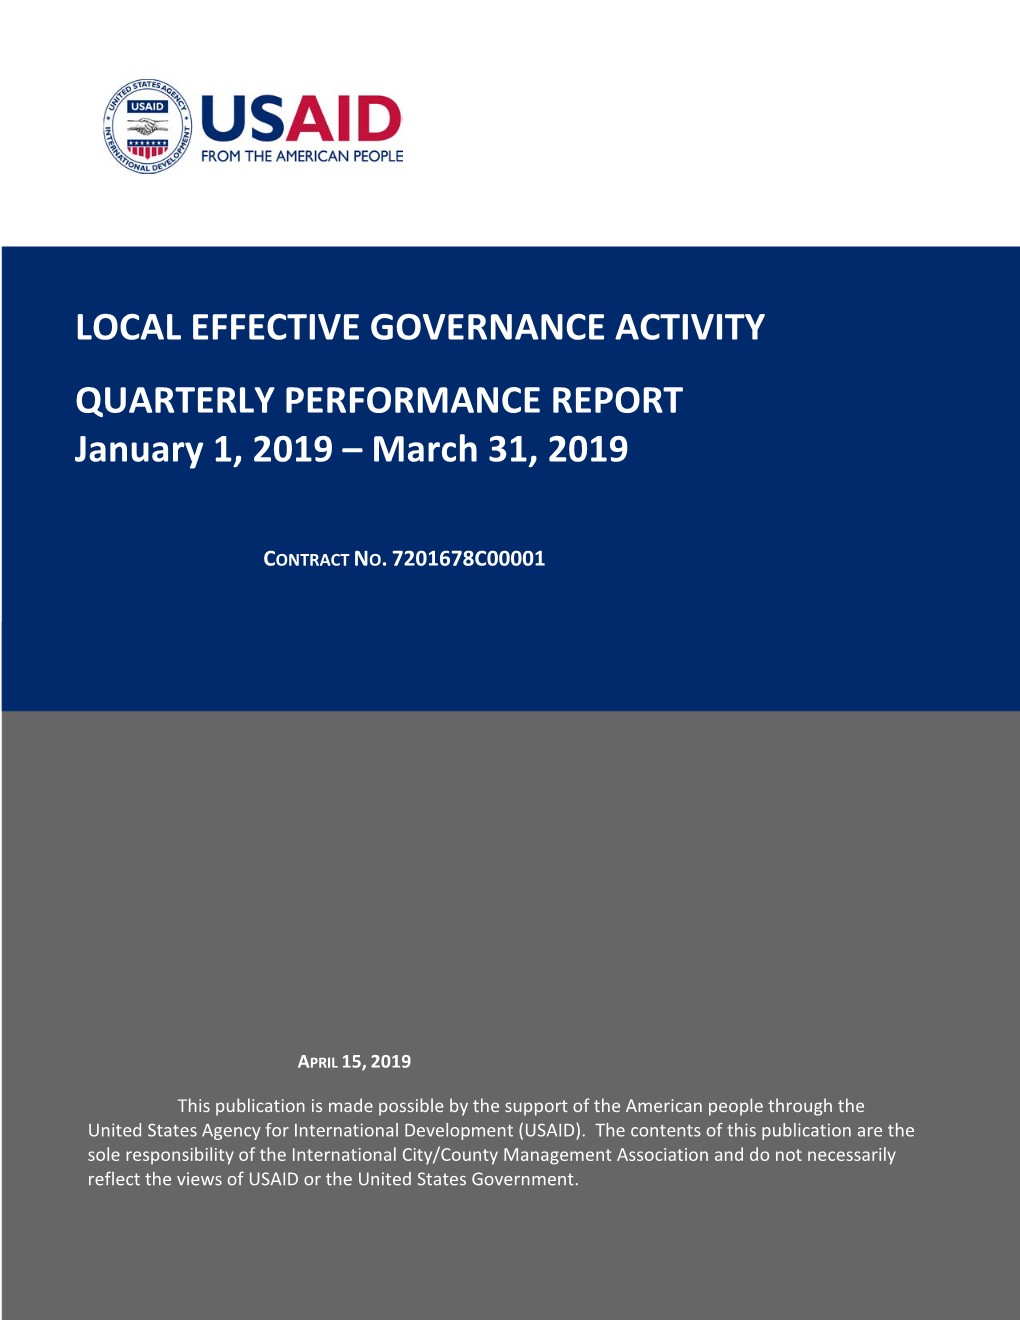 Local Effective Governance Activity Quarterly